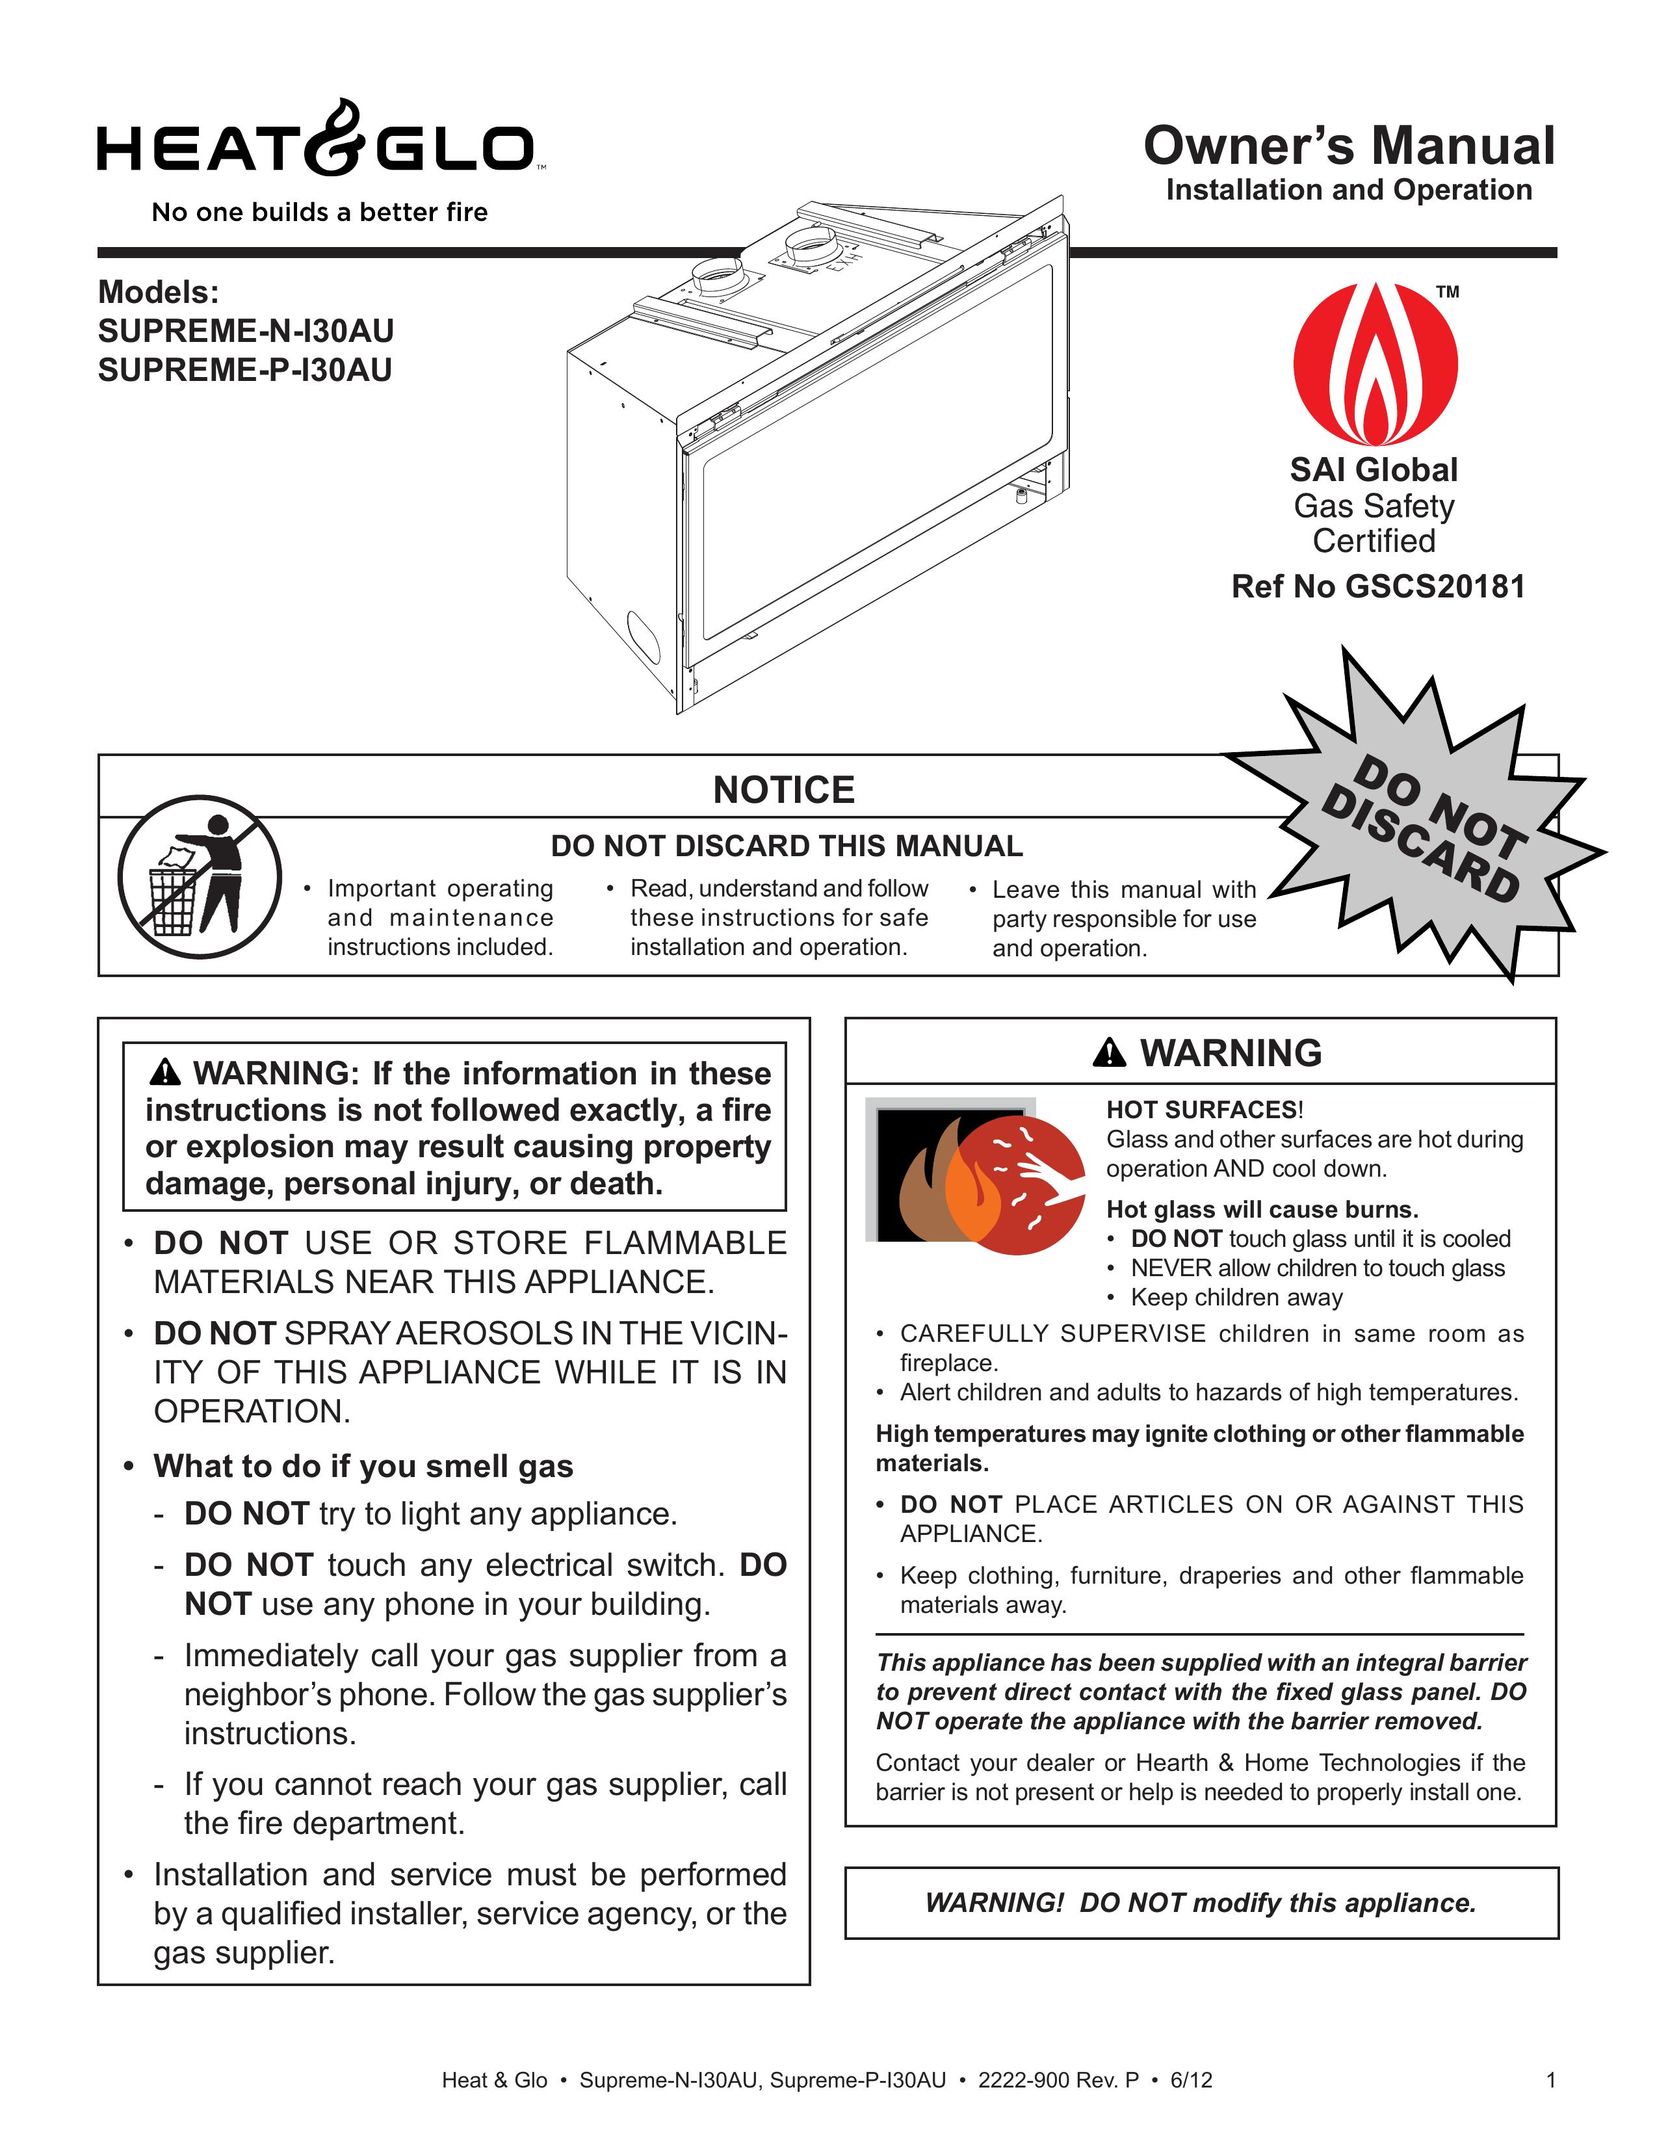 Heat & Glo LifeStyle SUPREME-P-I30AU Electric Heater User Manual